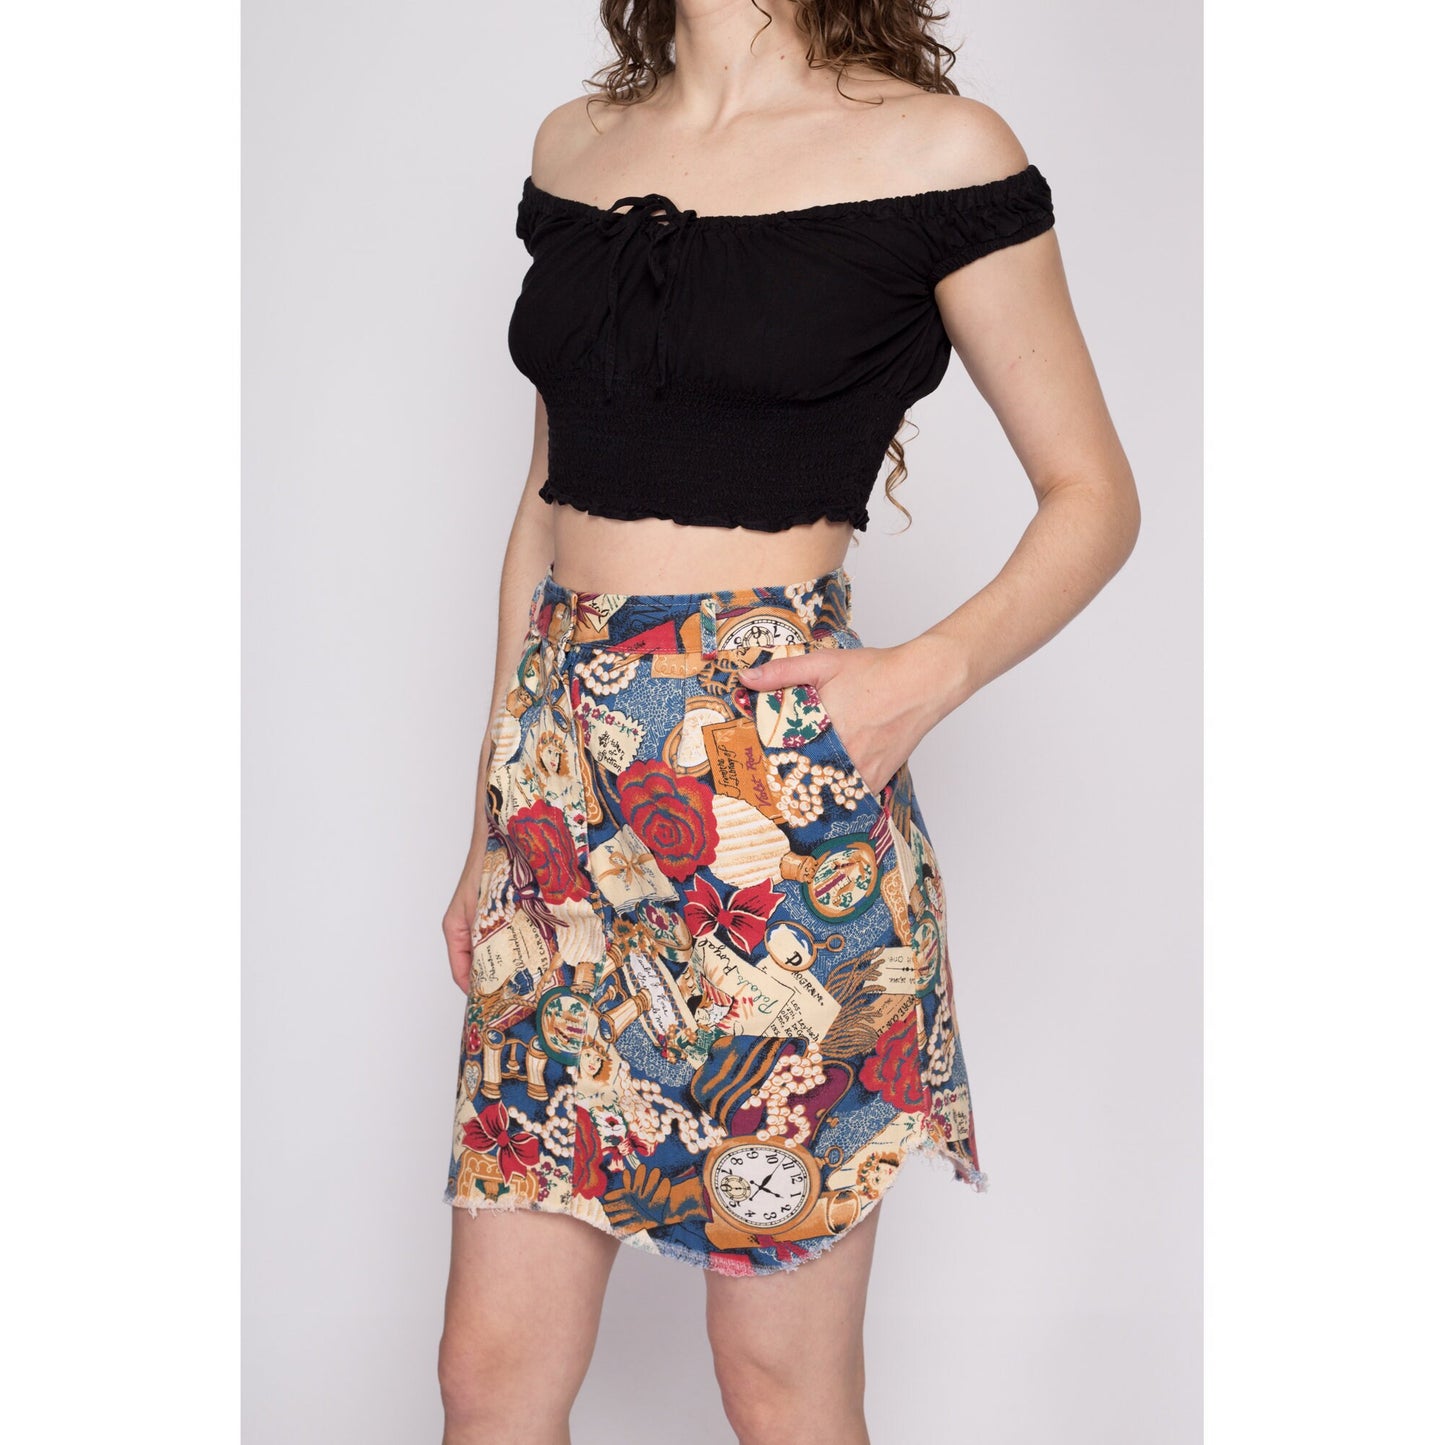 S| 80s Victorian Alice In Wonderland Print Denim Mini Skirt - Small, 27" | Vintage Boho High Waisted Novelty Cutoff Jean Skirt